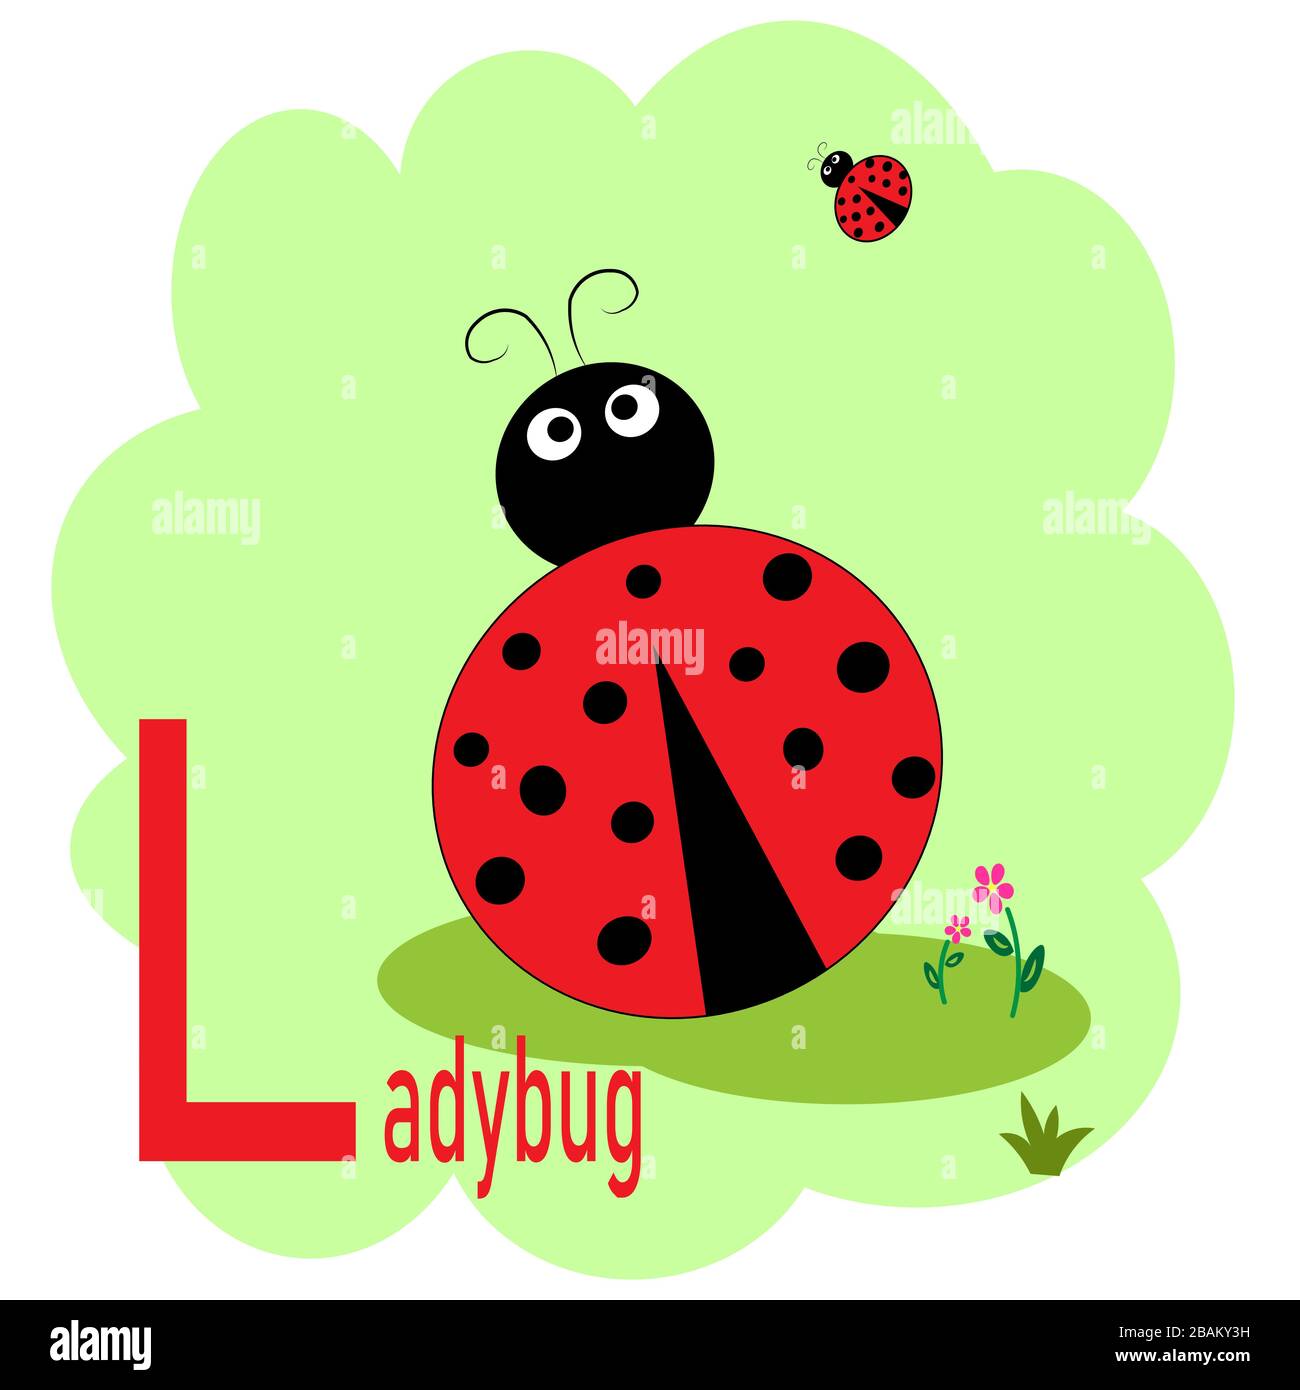 L word for ladybug animal alphabet illustration  Stock Vector